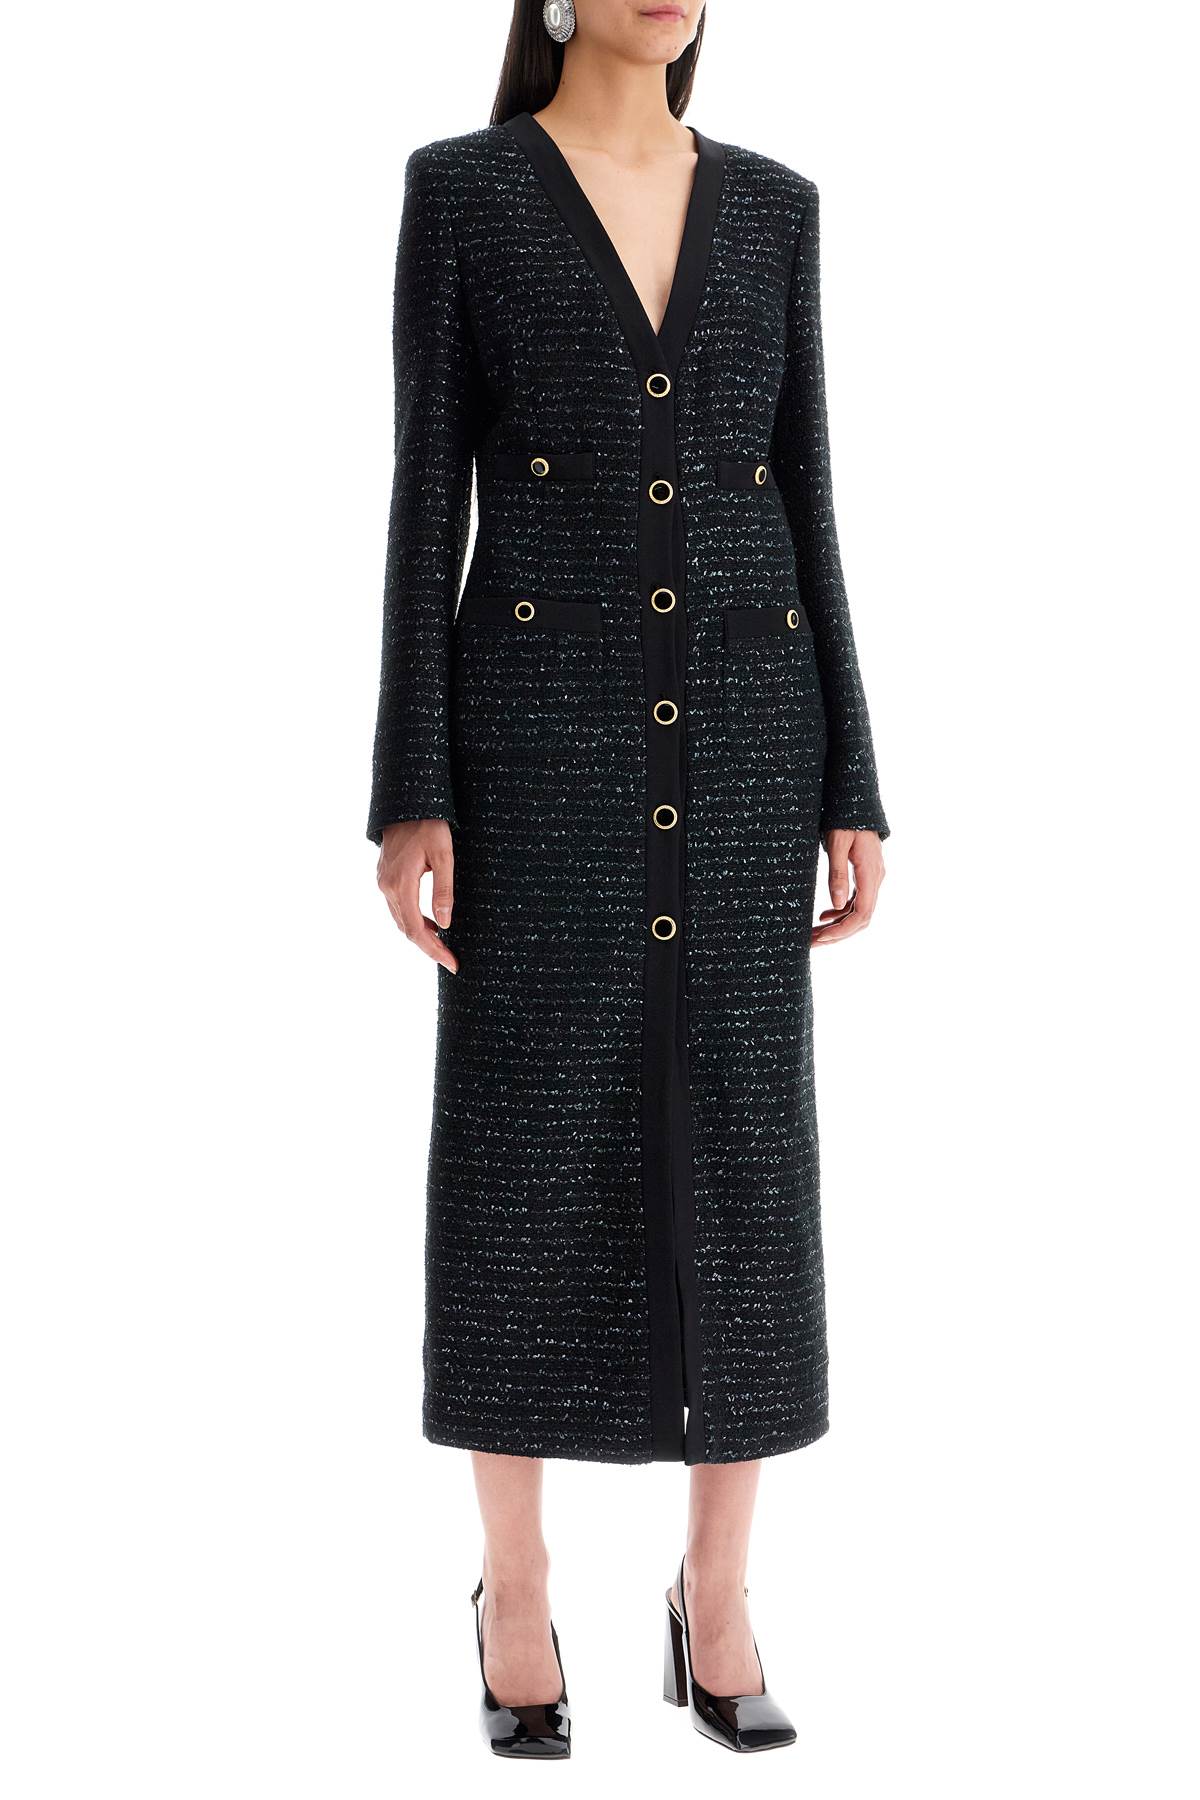 Alessandra Rich Midi Tweed Dress With Sequins   Black